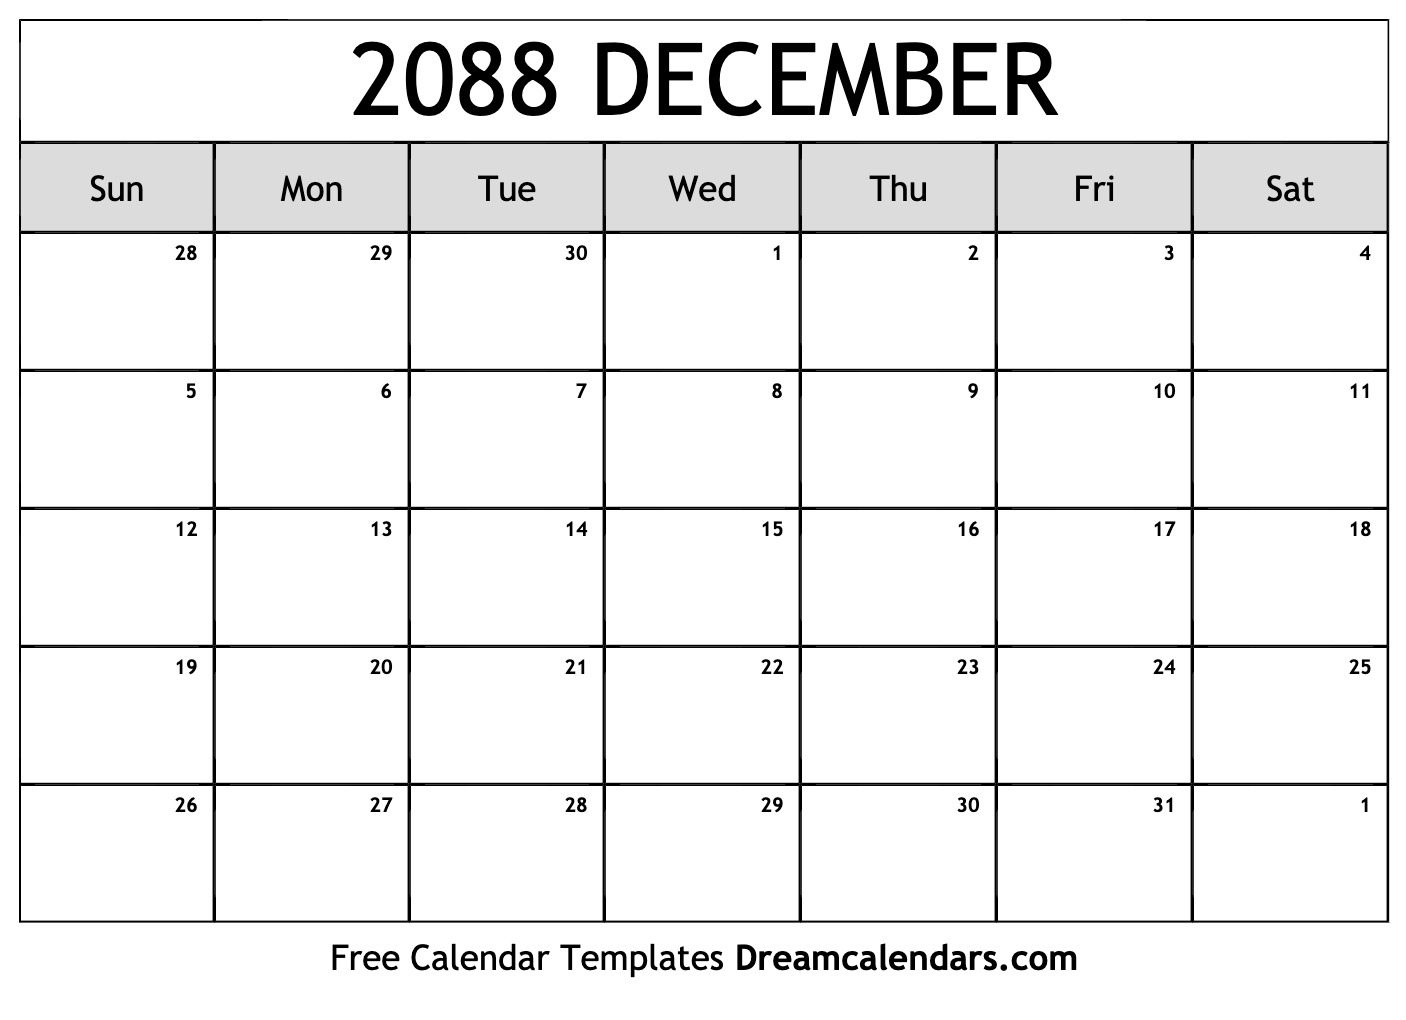 December 2088 calendar Free blank printable with holidays